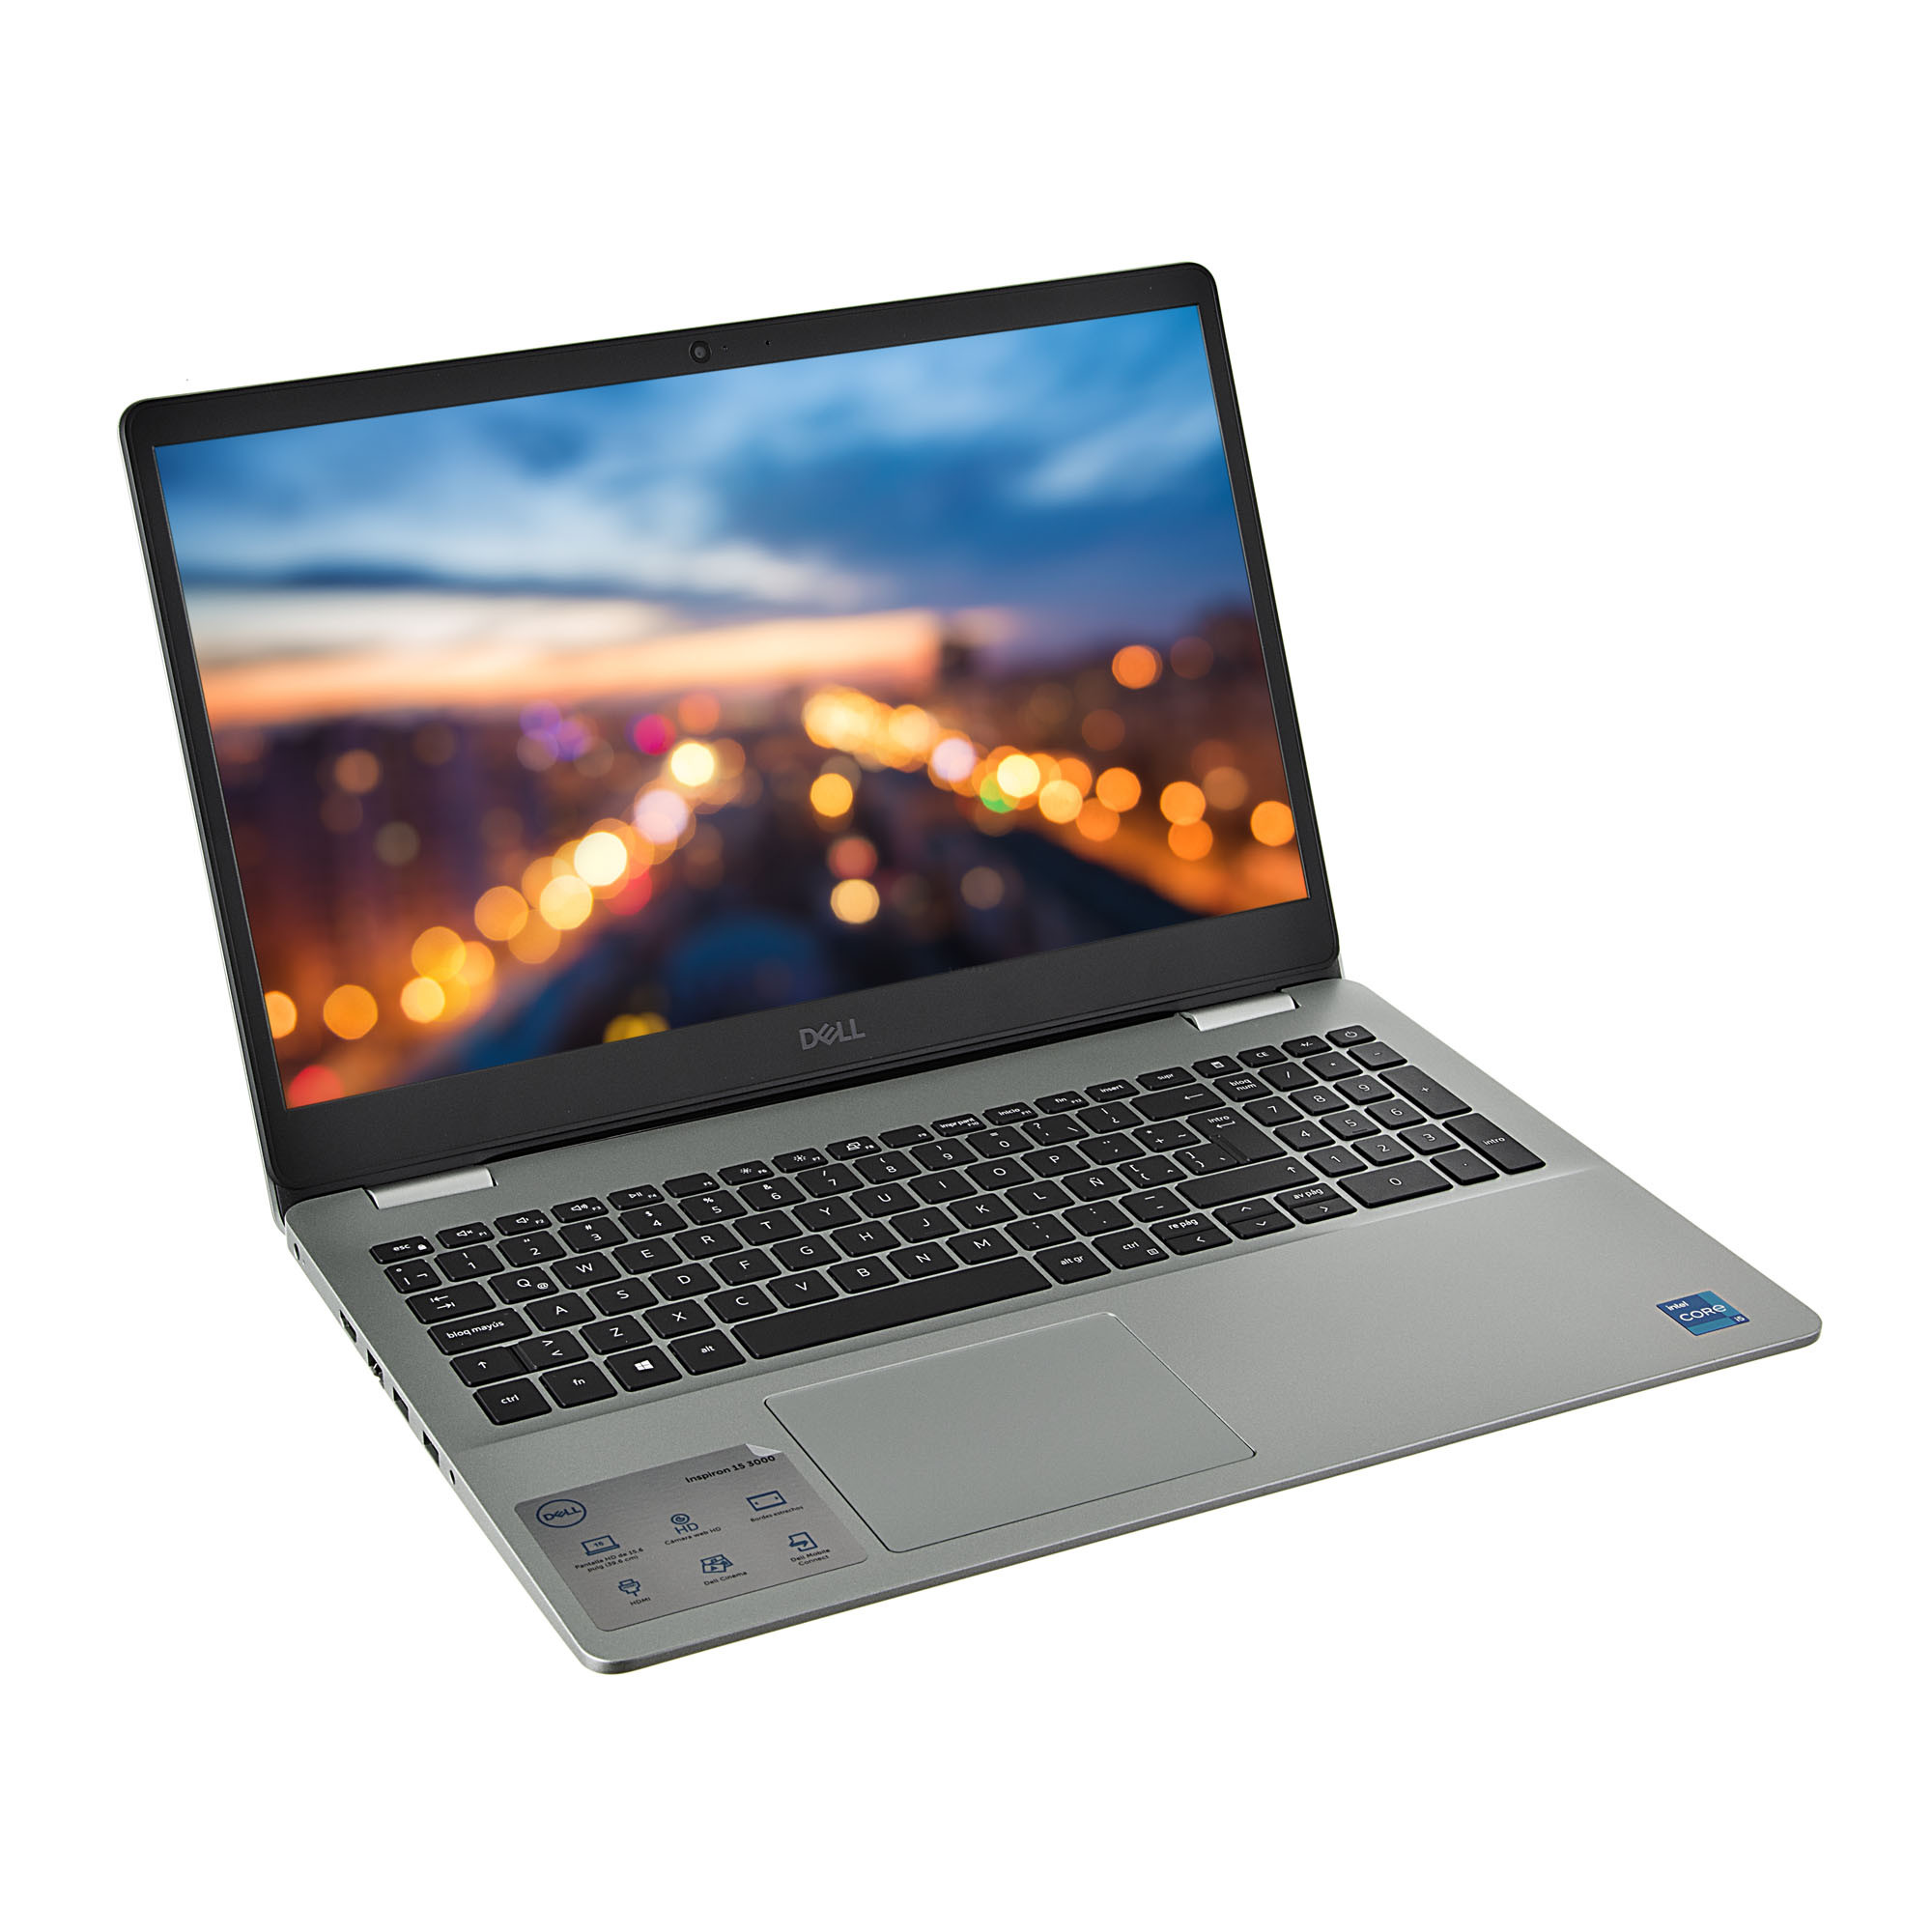 Dell Laptop Inspiron 15 3501 Core I5 1135g7 8gb 256gb Ssd 156 0973